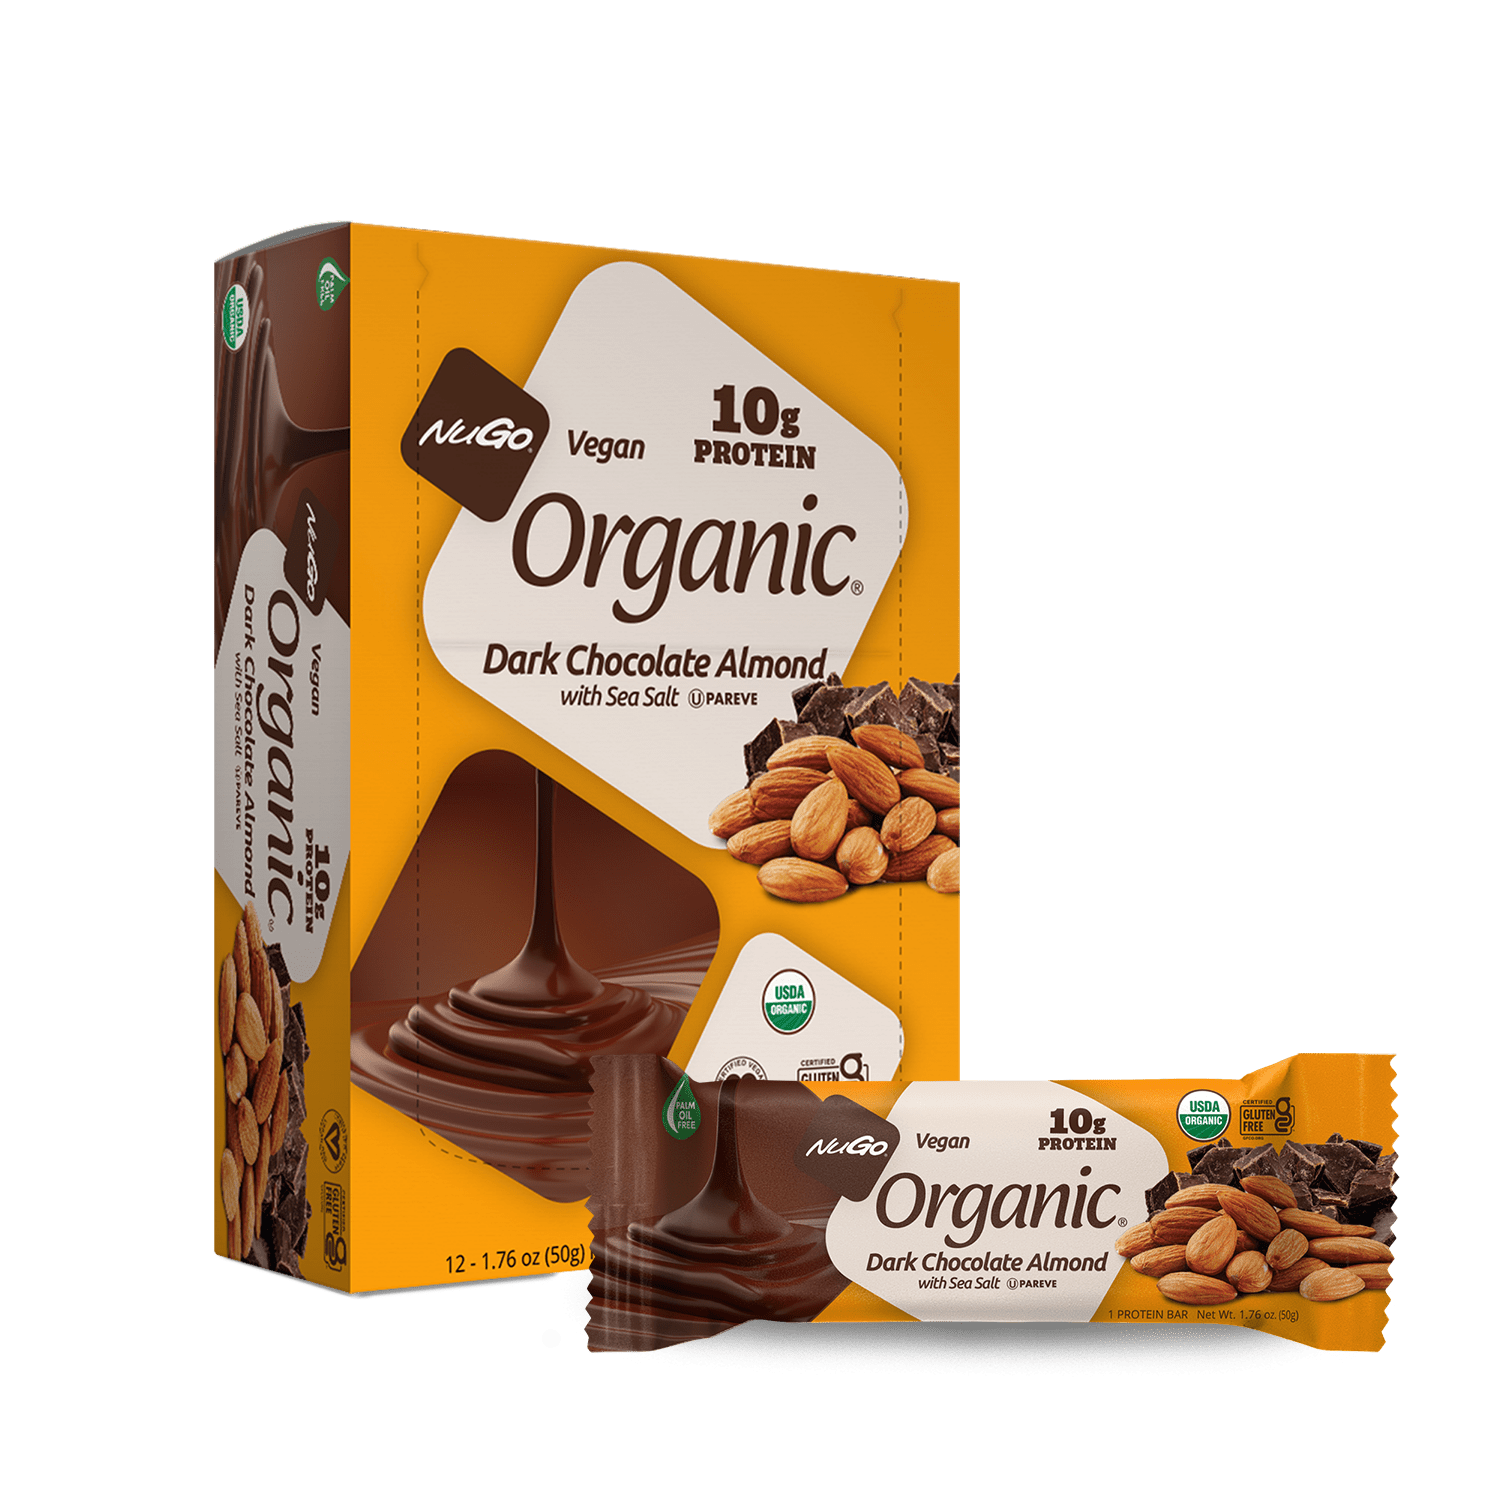 NuGo Organic Dark Chocolate Almond Bar and Box